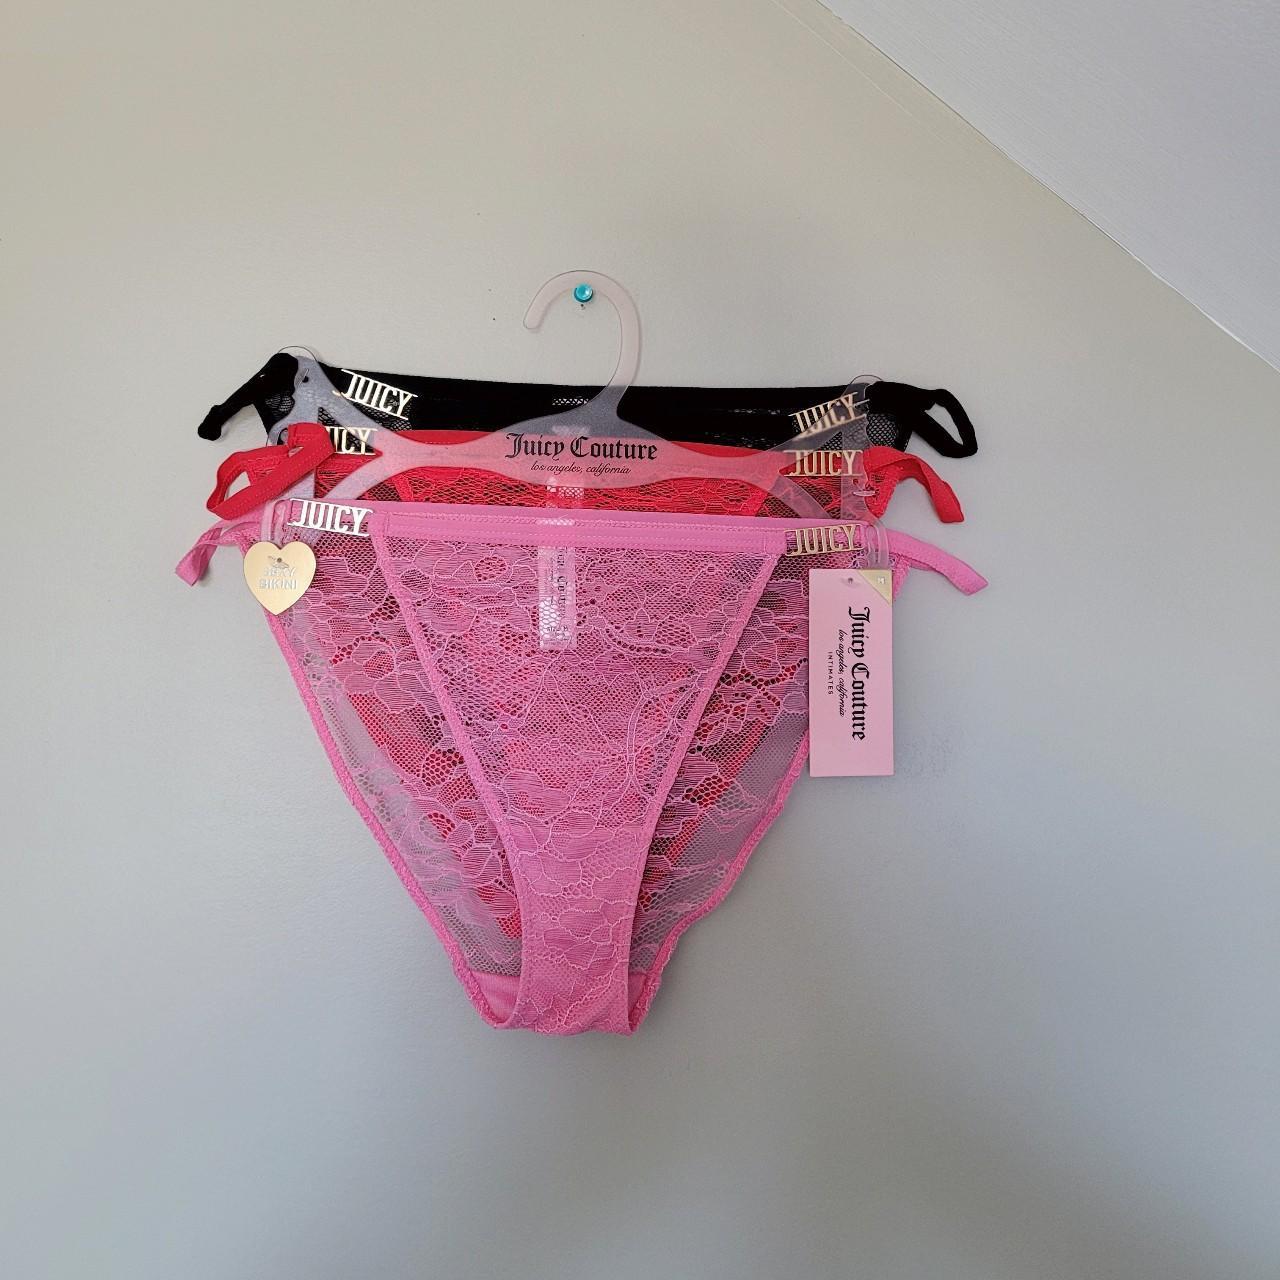 item - juicy couture underwear brand - juicy - Depop